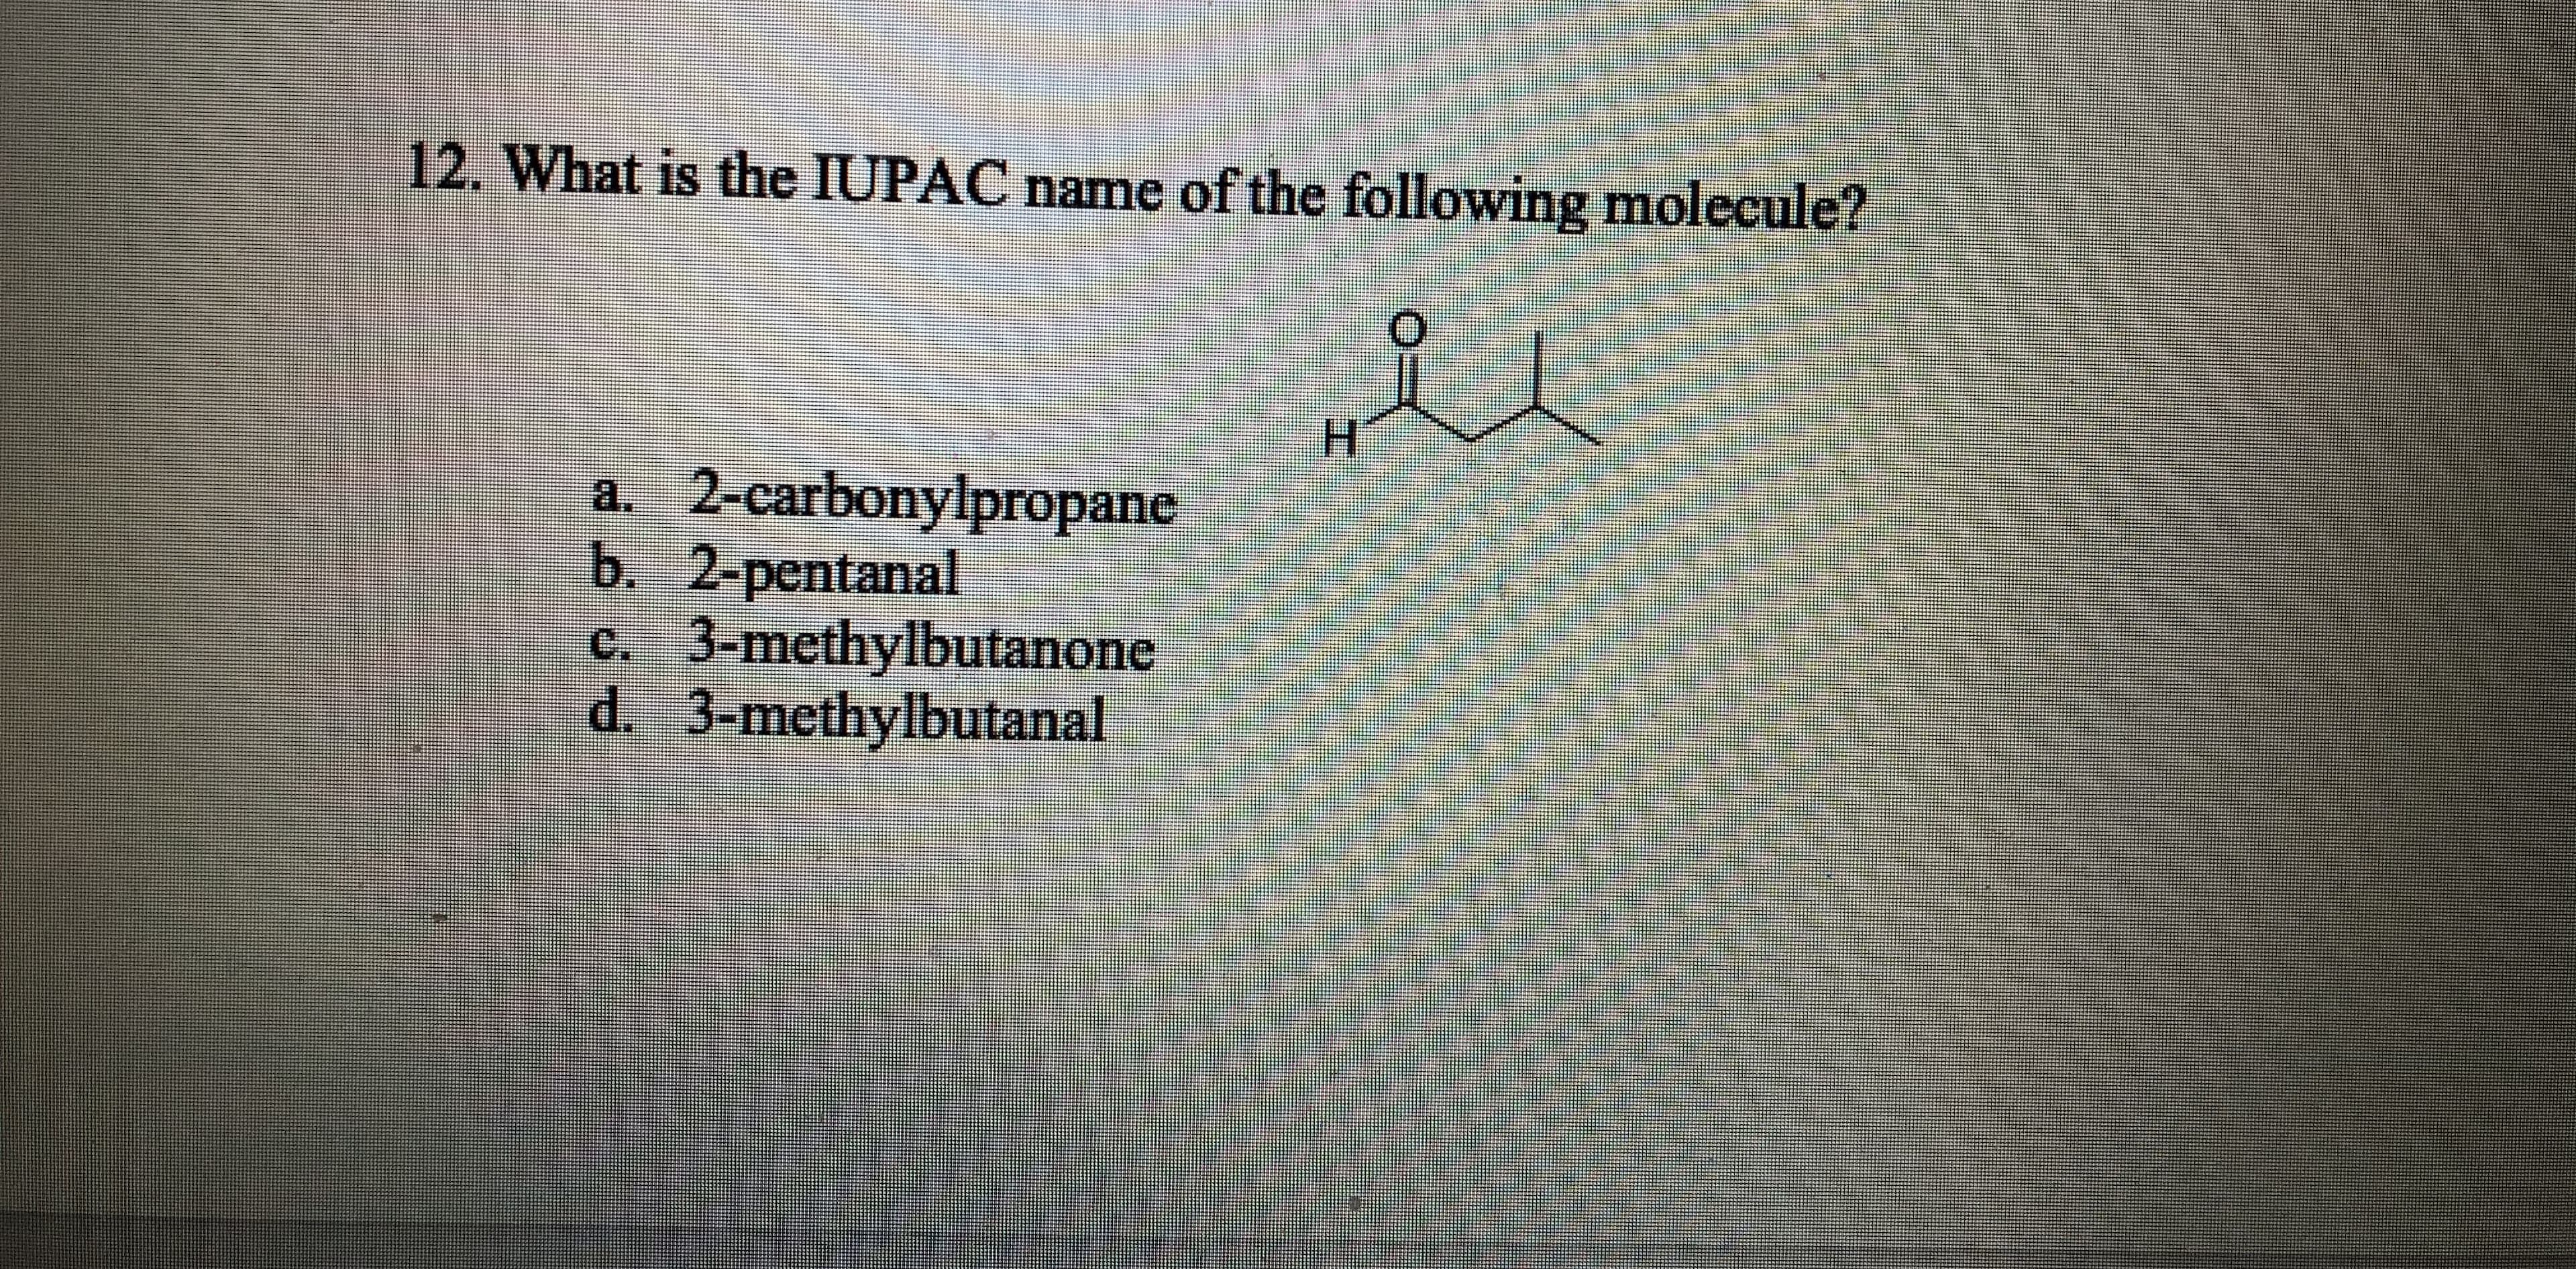 12. What is the IUPAC name of the following molecule?
H.
a. 2-carbonylpropane
b. 2-pentanal
c. 3-methylbutanone
d. 3-methylbutanal
